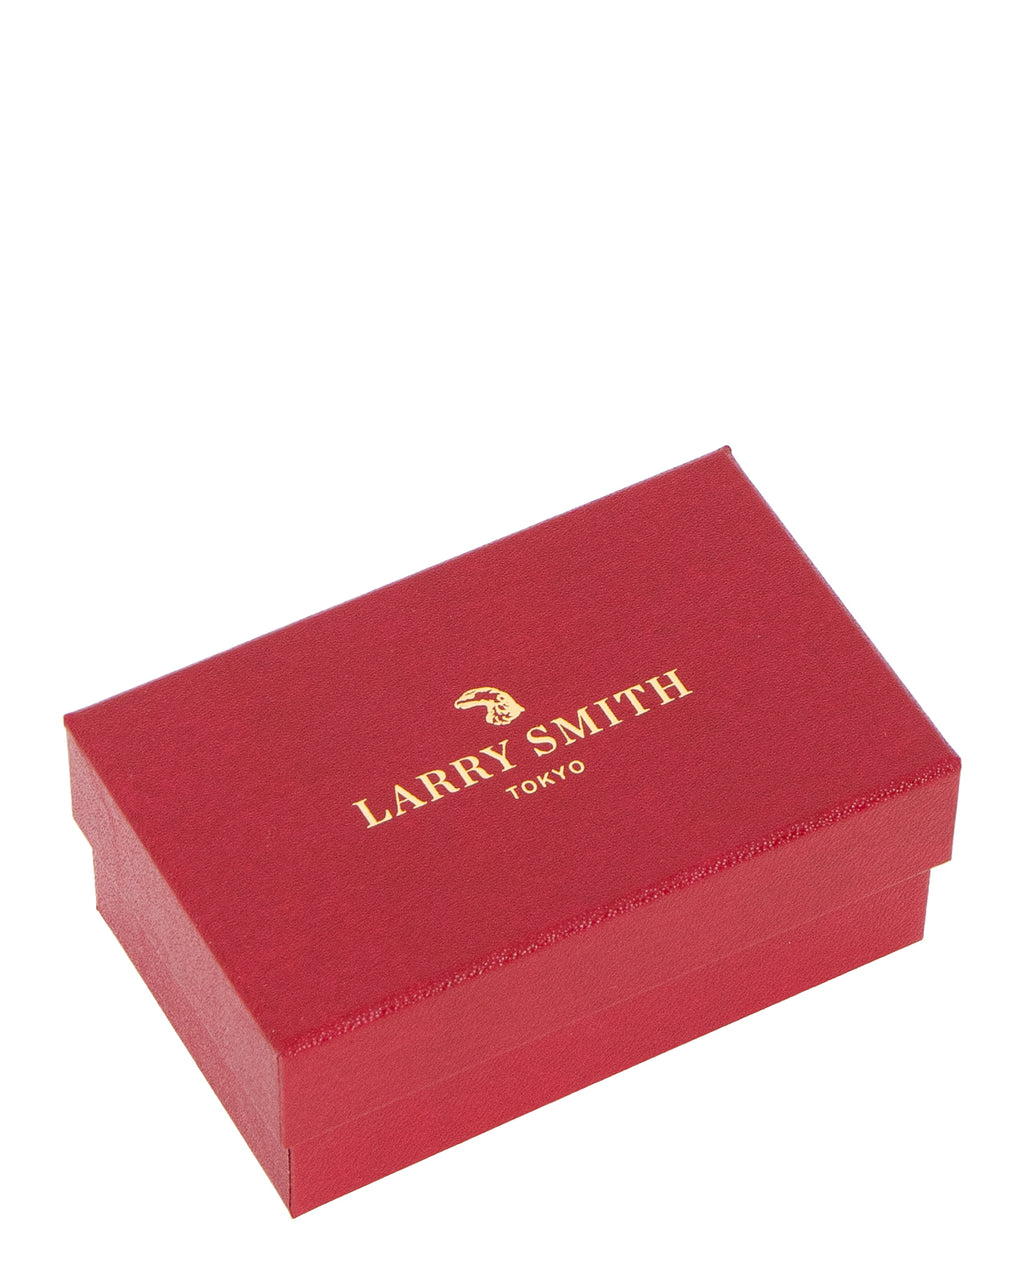 Larry Smith Luck Chain Bracelet, Medium